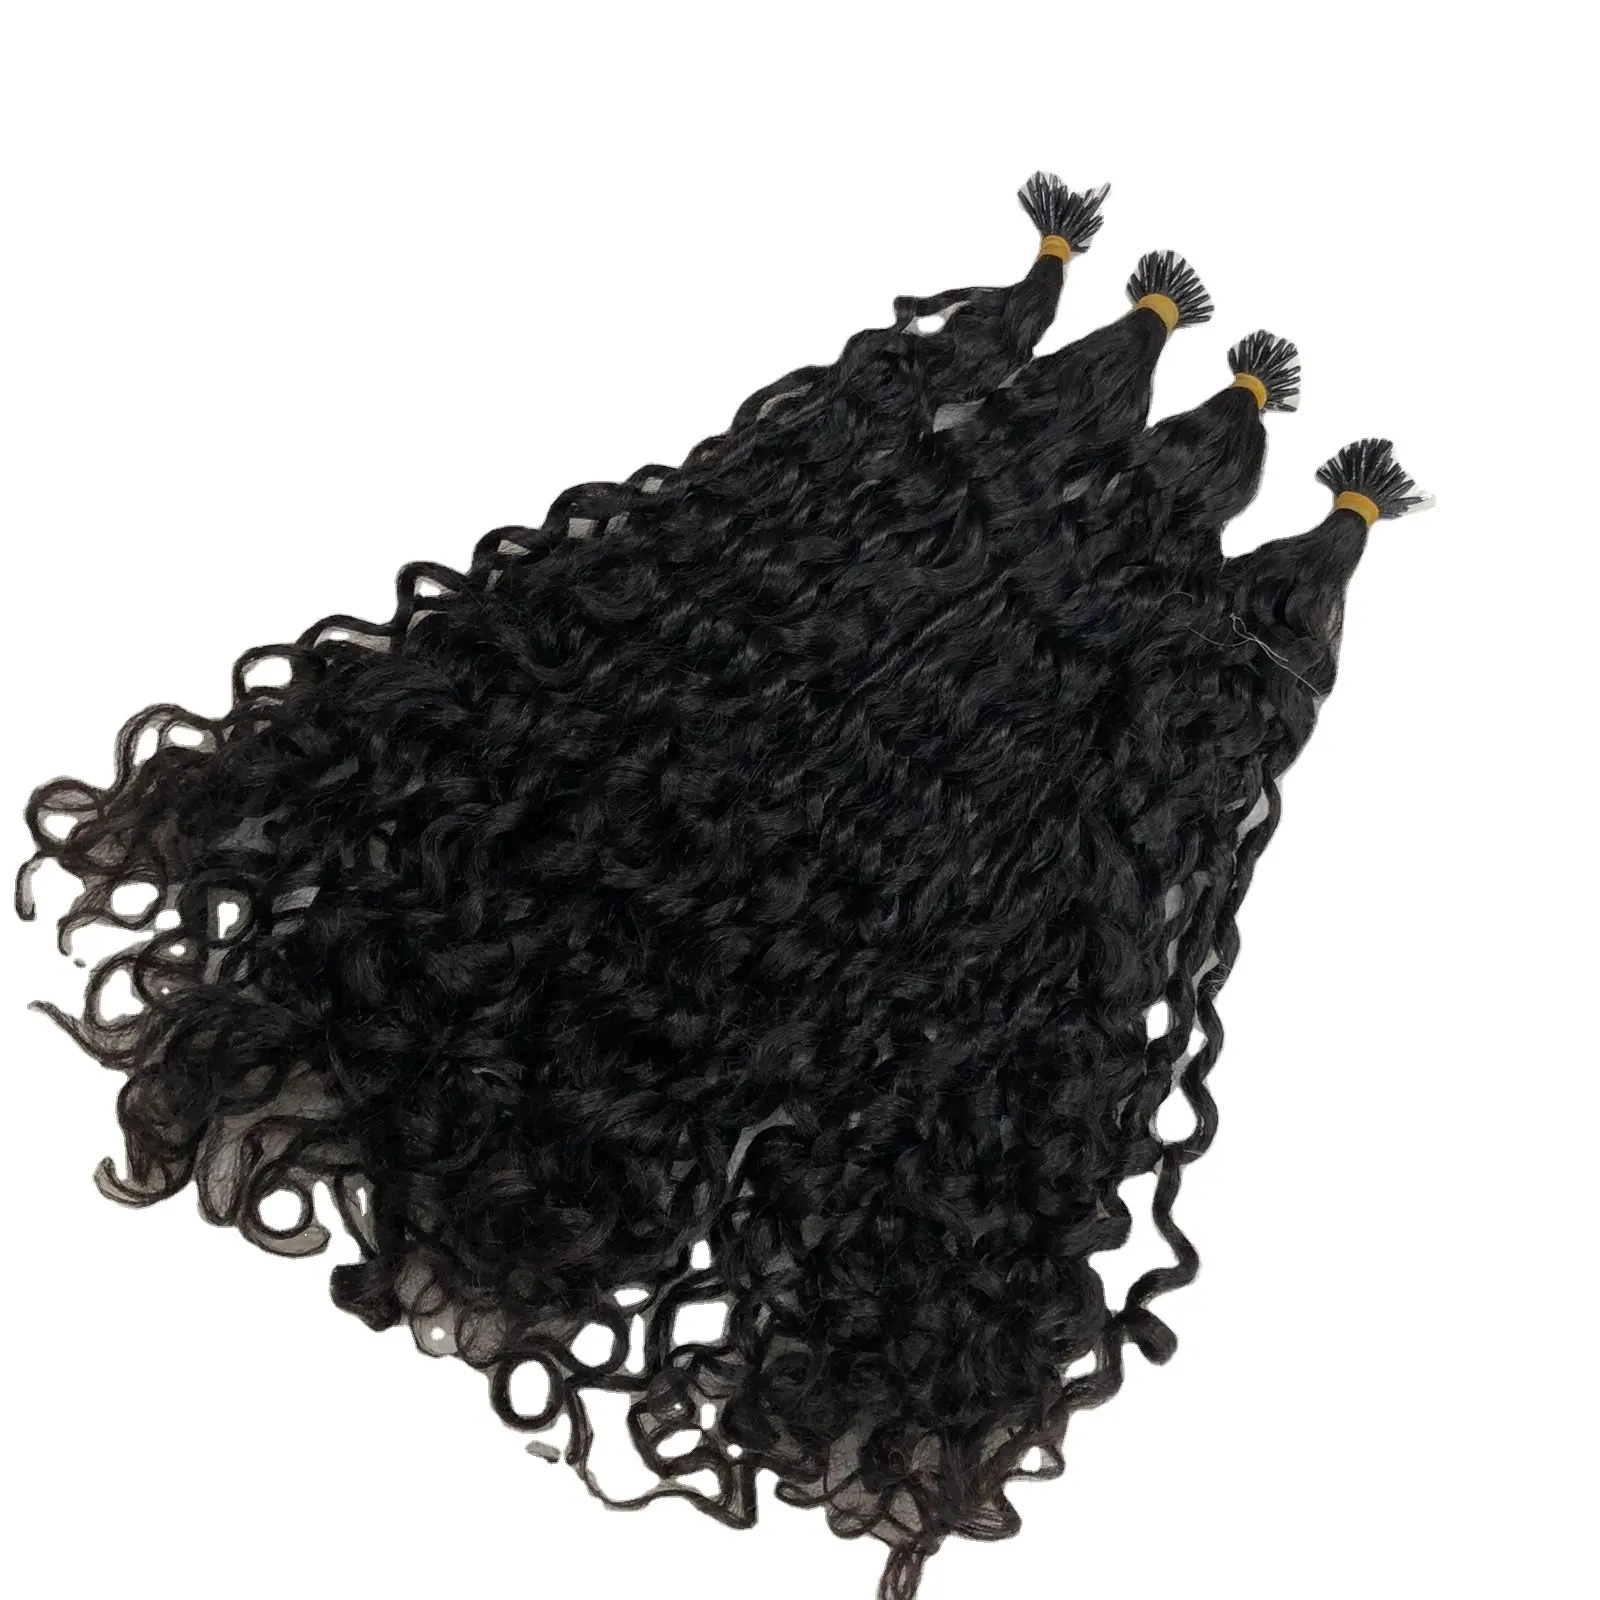 Romantic Curly hair extensions natural virgin Vietnamese human hair cuticle aligned top quality hair